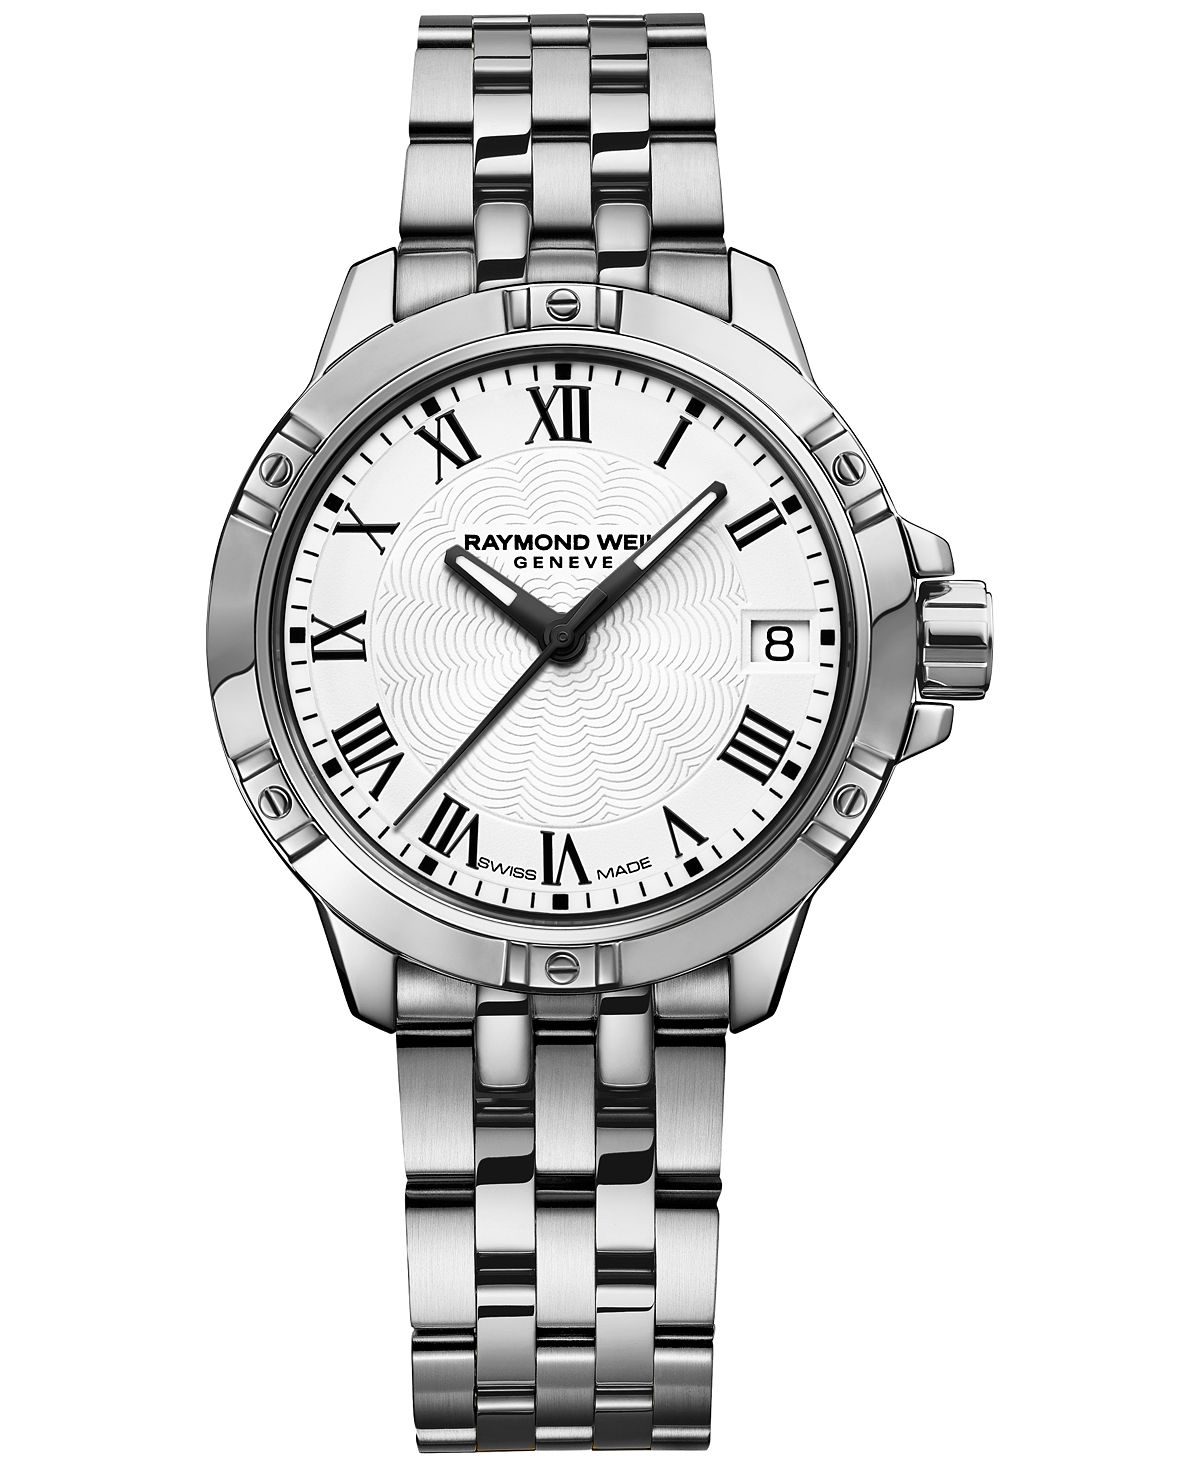 Швейцарские женские часы Tango с браслетом из нержавеющей стали, 30 мм 5960-ST-00300 Raymond Weil, серебро часы raymond weil 5960 st 00995